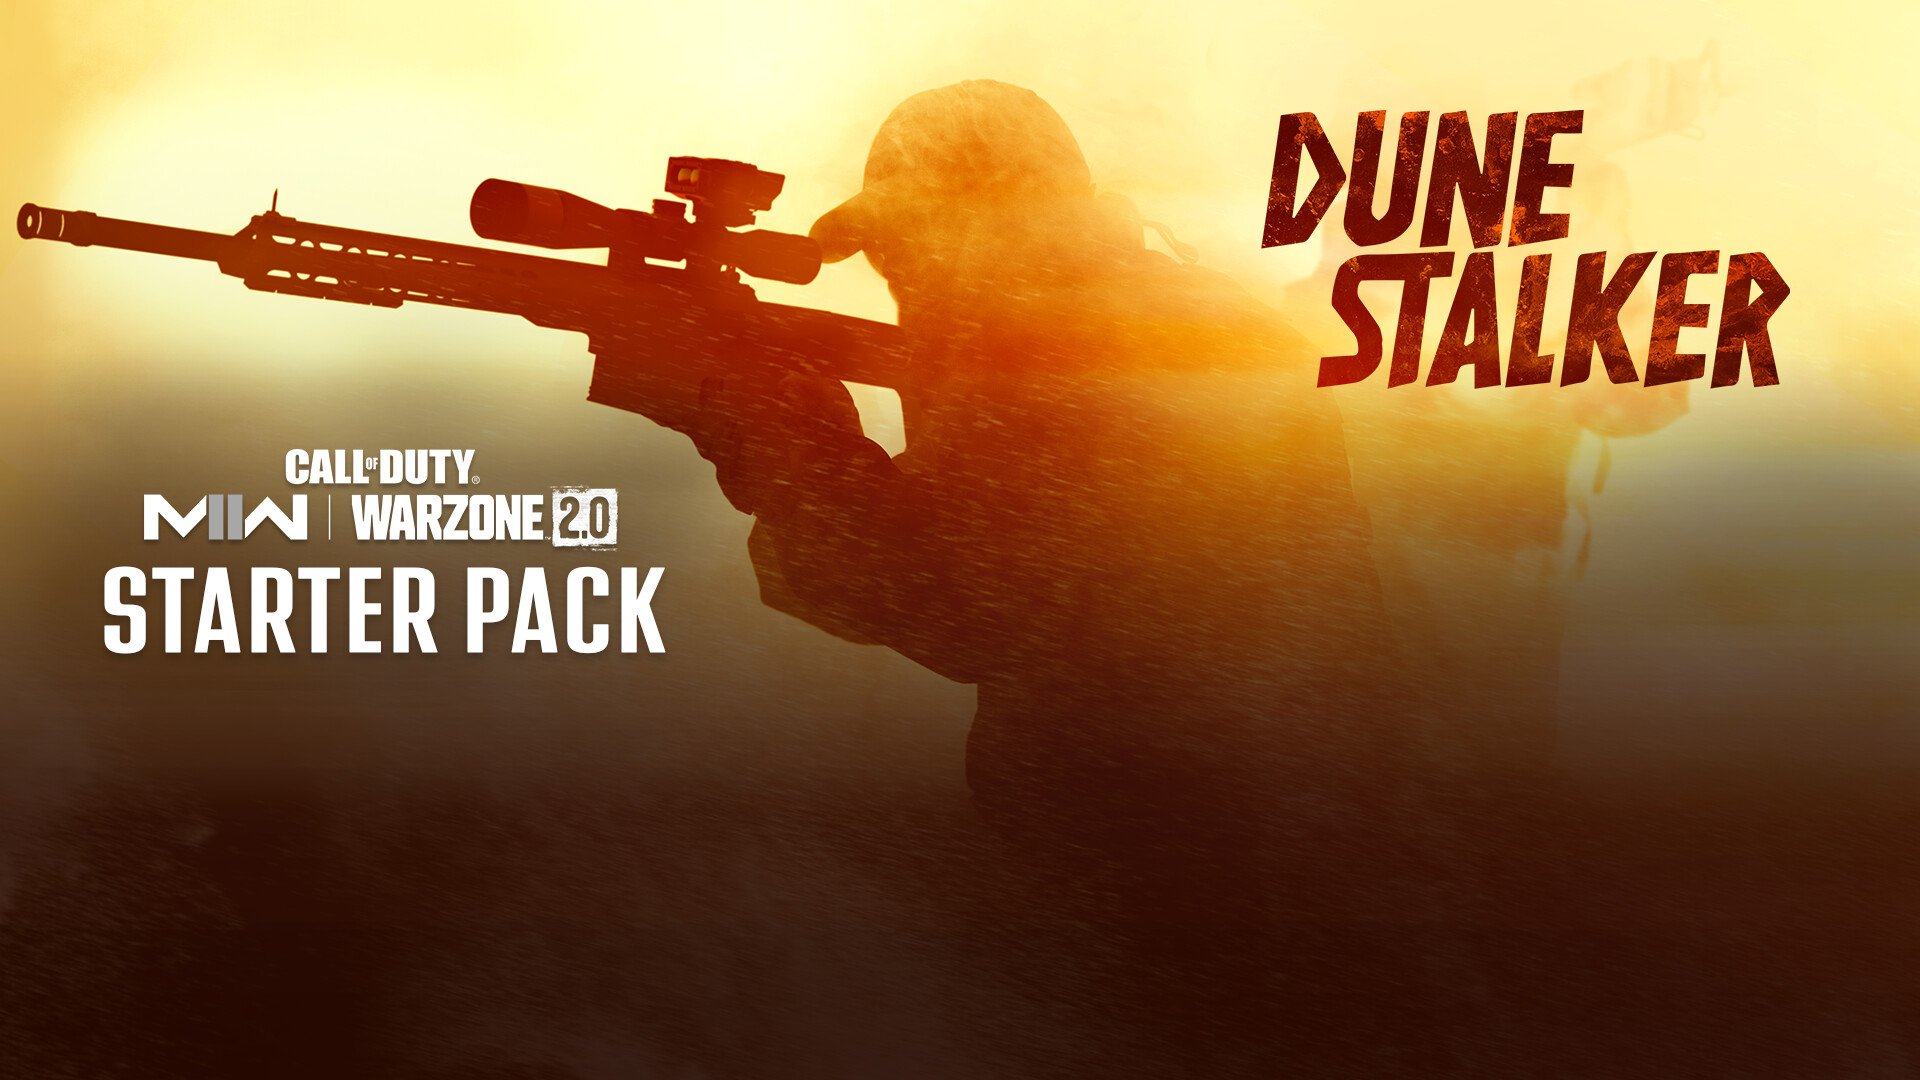 Call of Duty: Modern Warfare II - Dune Stalker: Starter Pack DLC Steam Altergift USD 13.93